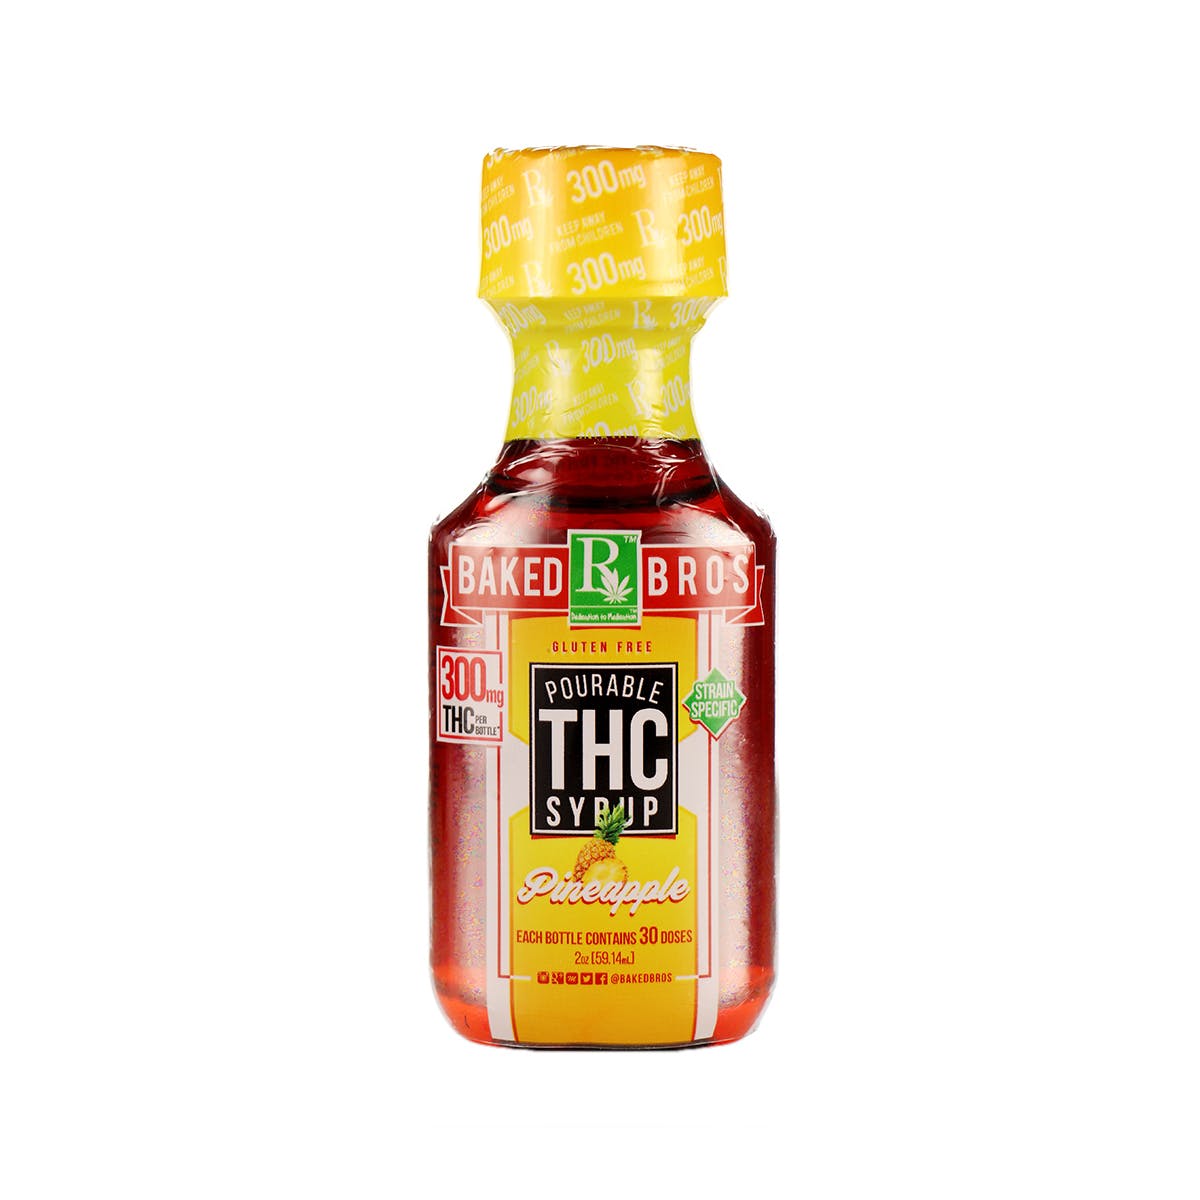 THC Syrup Pineapple 300mg